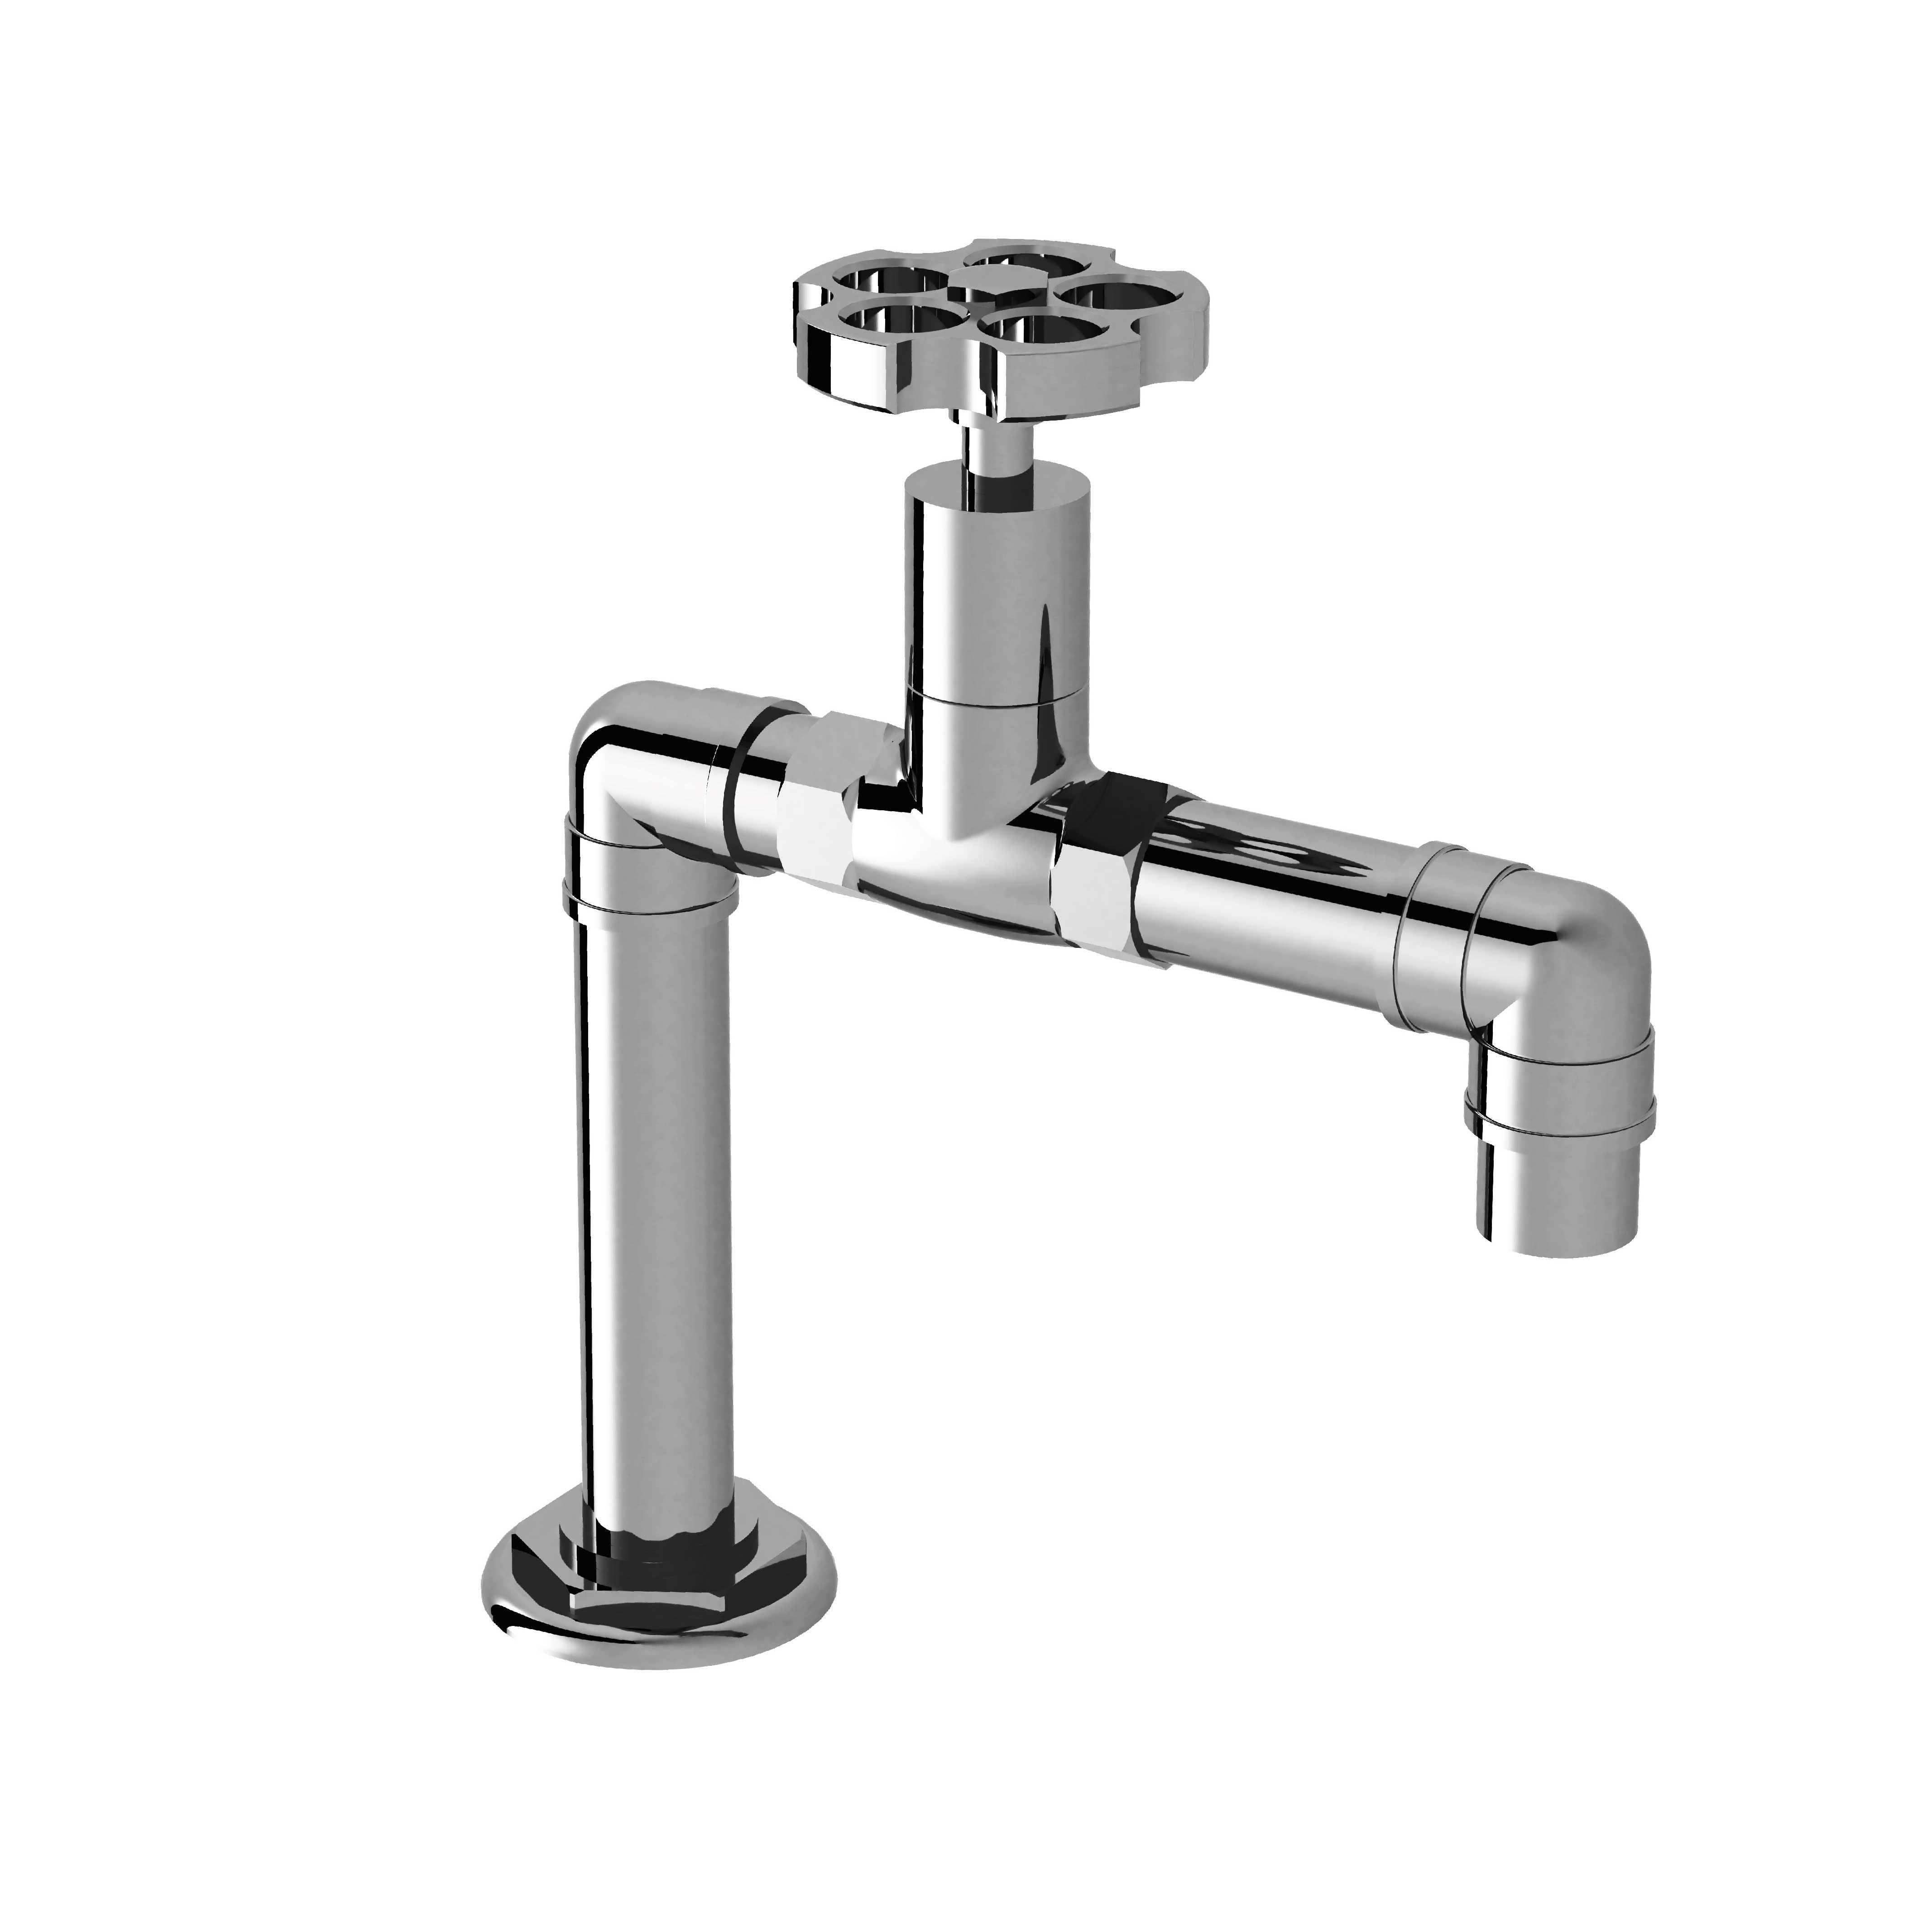 M81-4S1 Rim mounted wash-hand basin tap